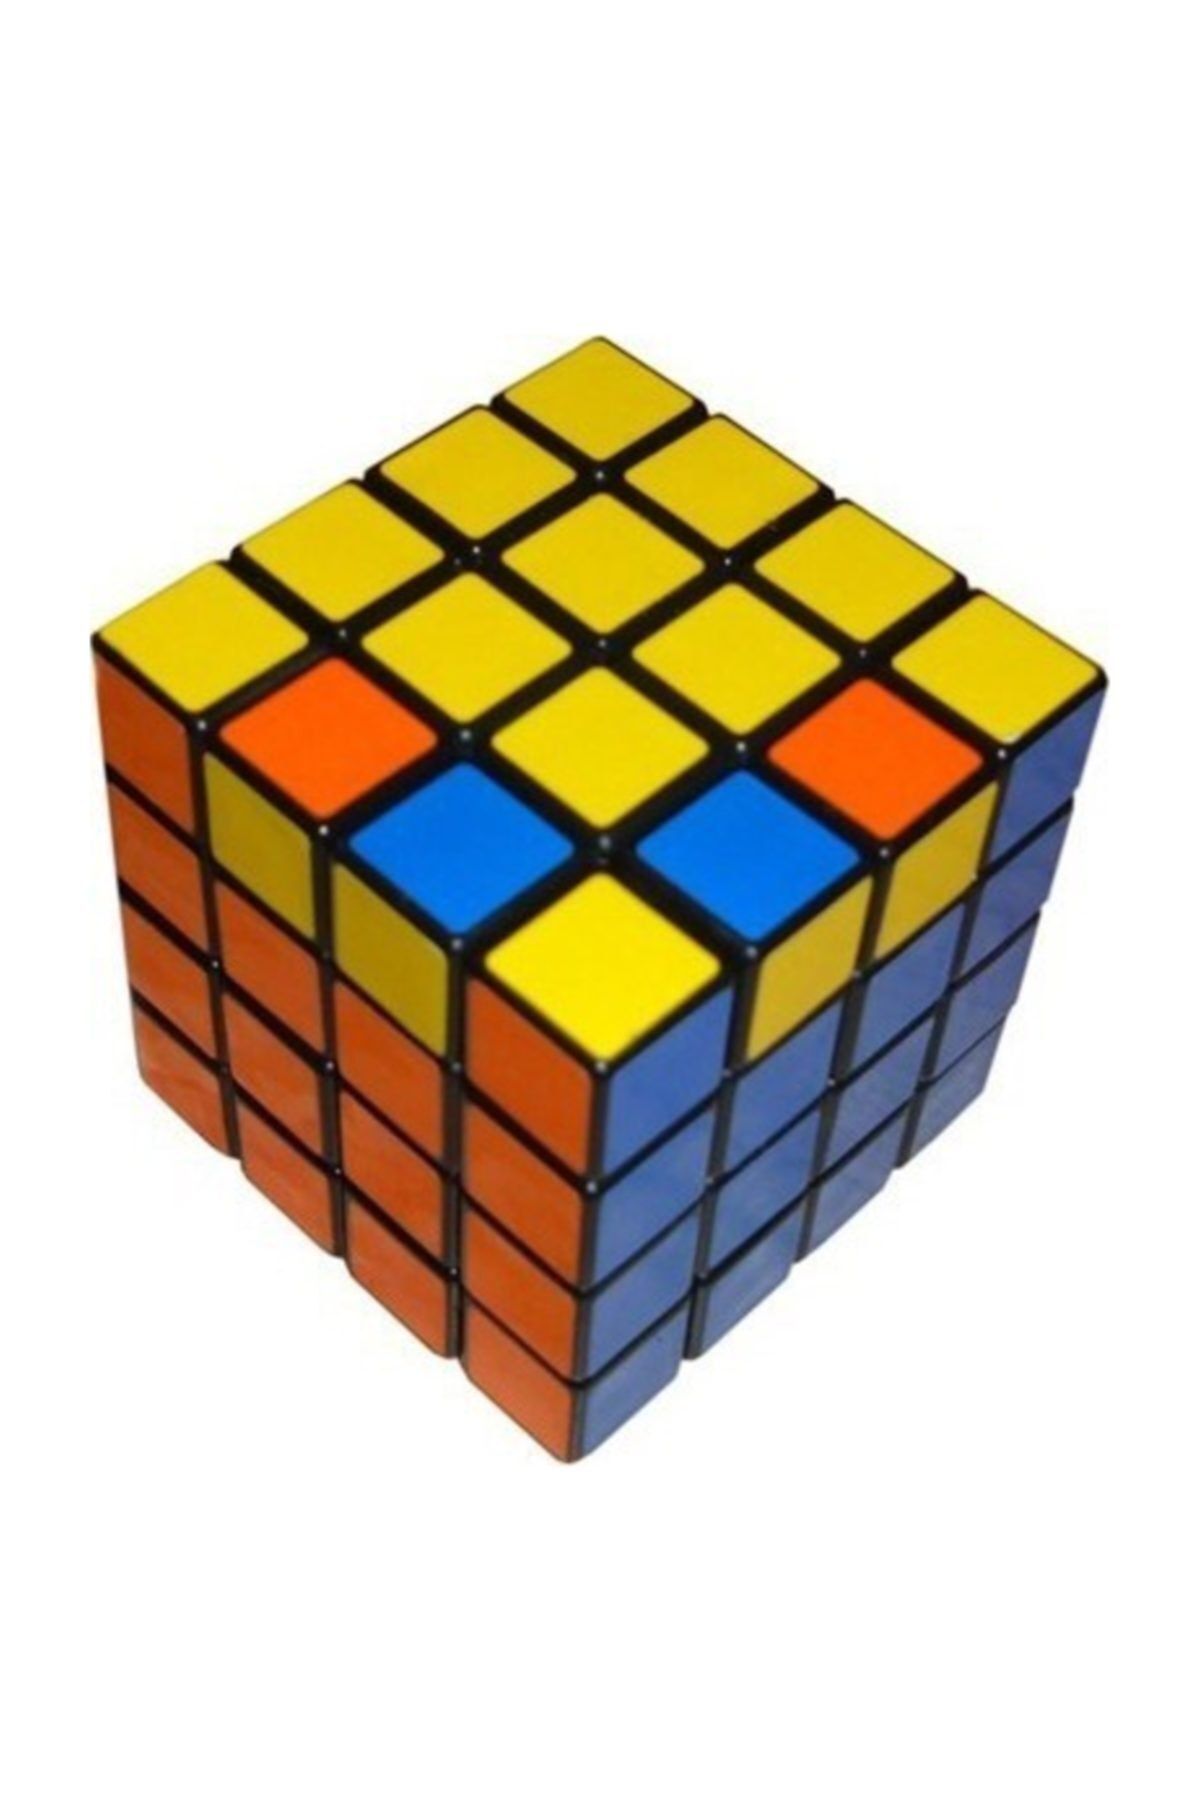 Cube 4pda. 4x4 Cube. 4x4 Rubiks Cube form. Куб 4х4х4. Кубик Рубика 4*4.